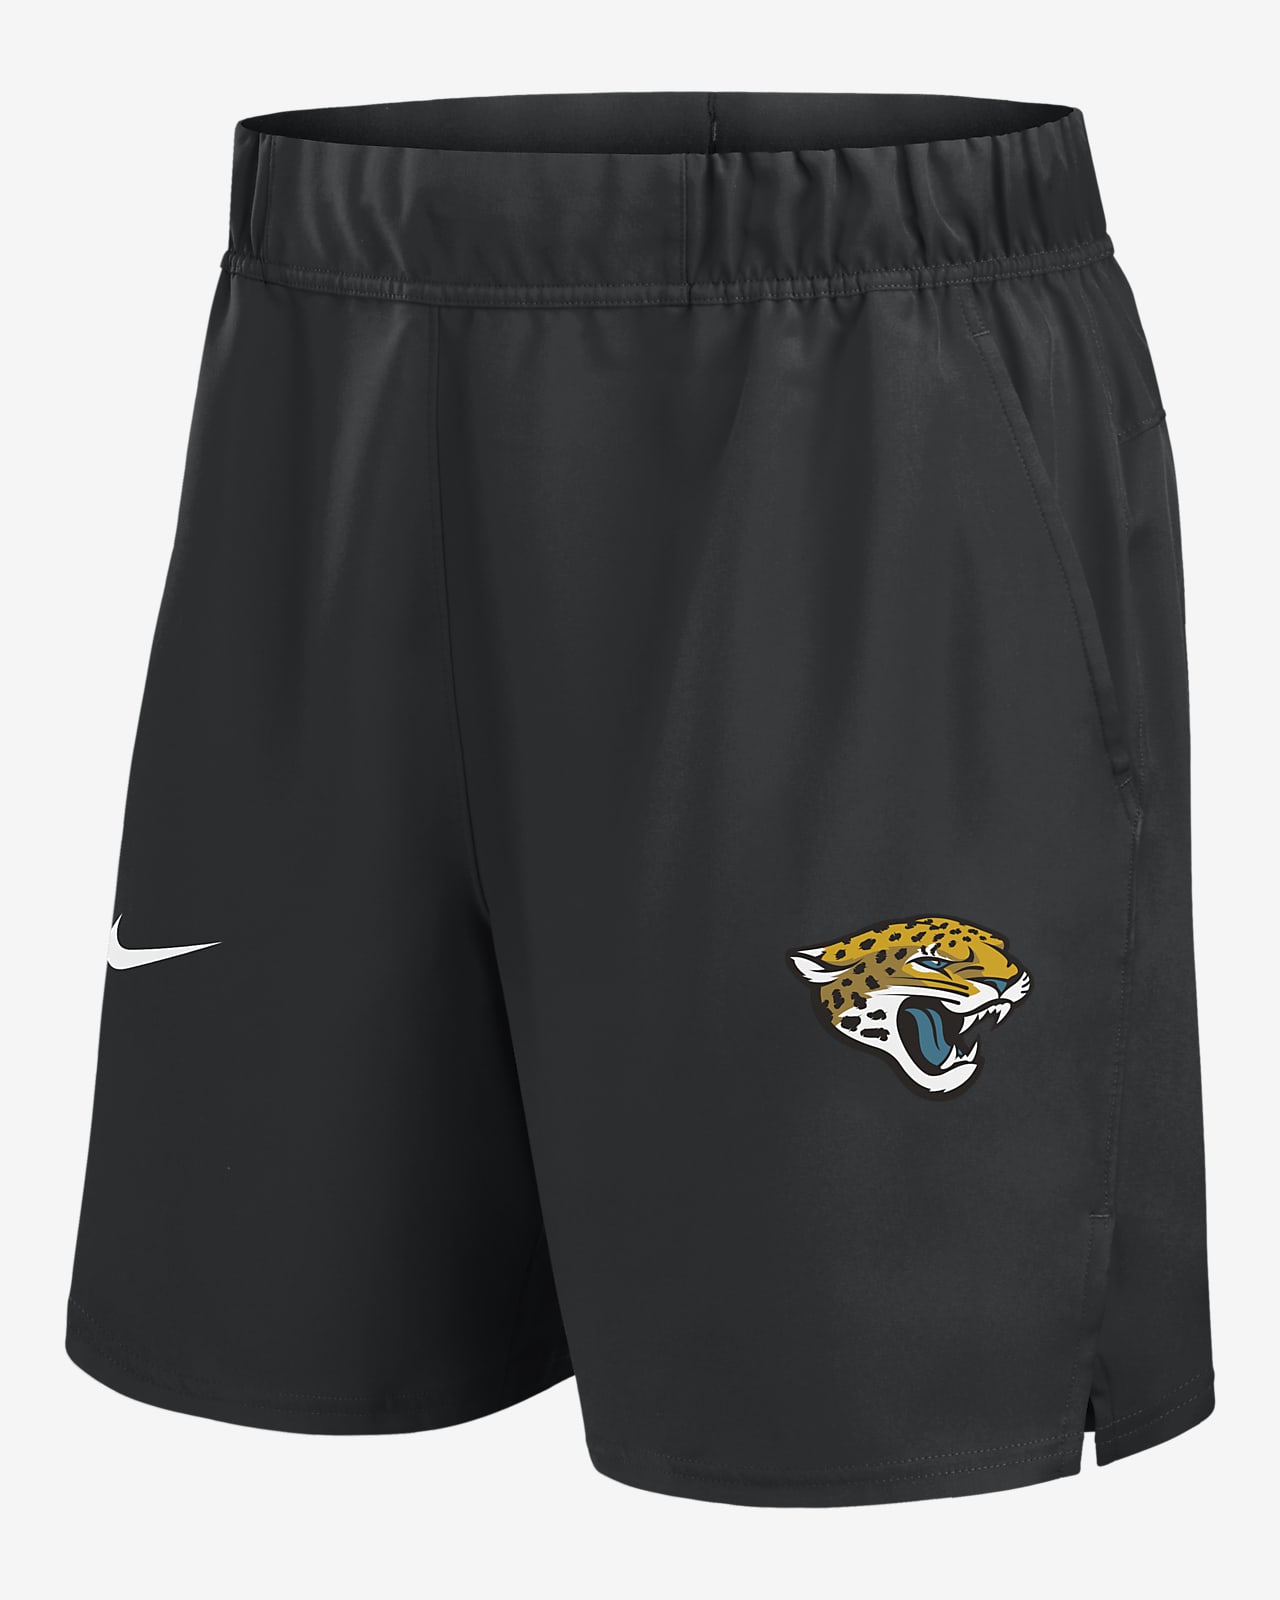 Shorts Nike Dri-FIT de la NFL para hombre Jacksonville Jaguars Blitz Victory